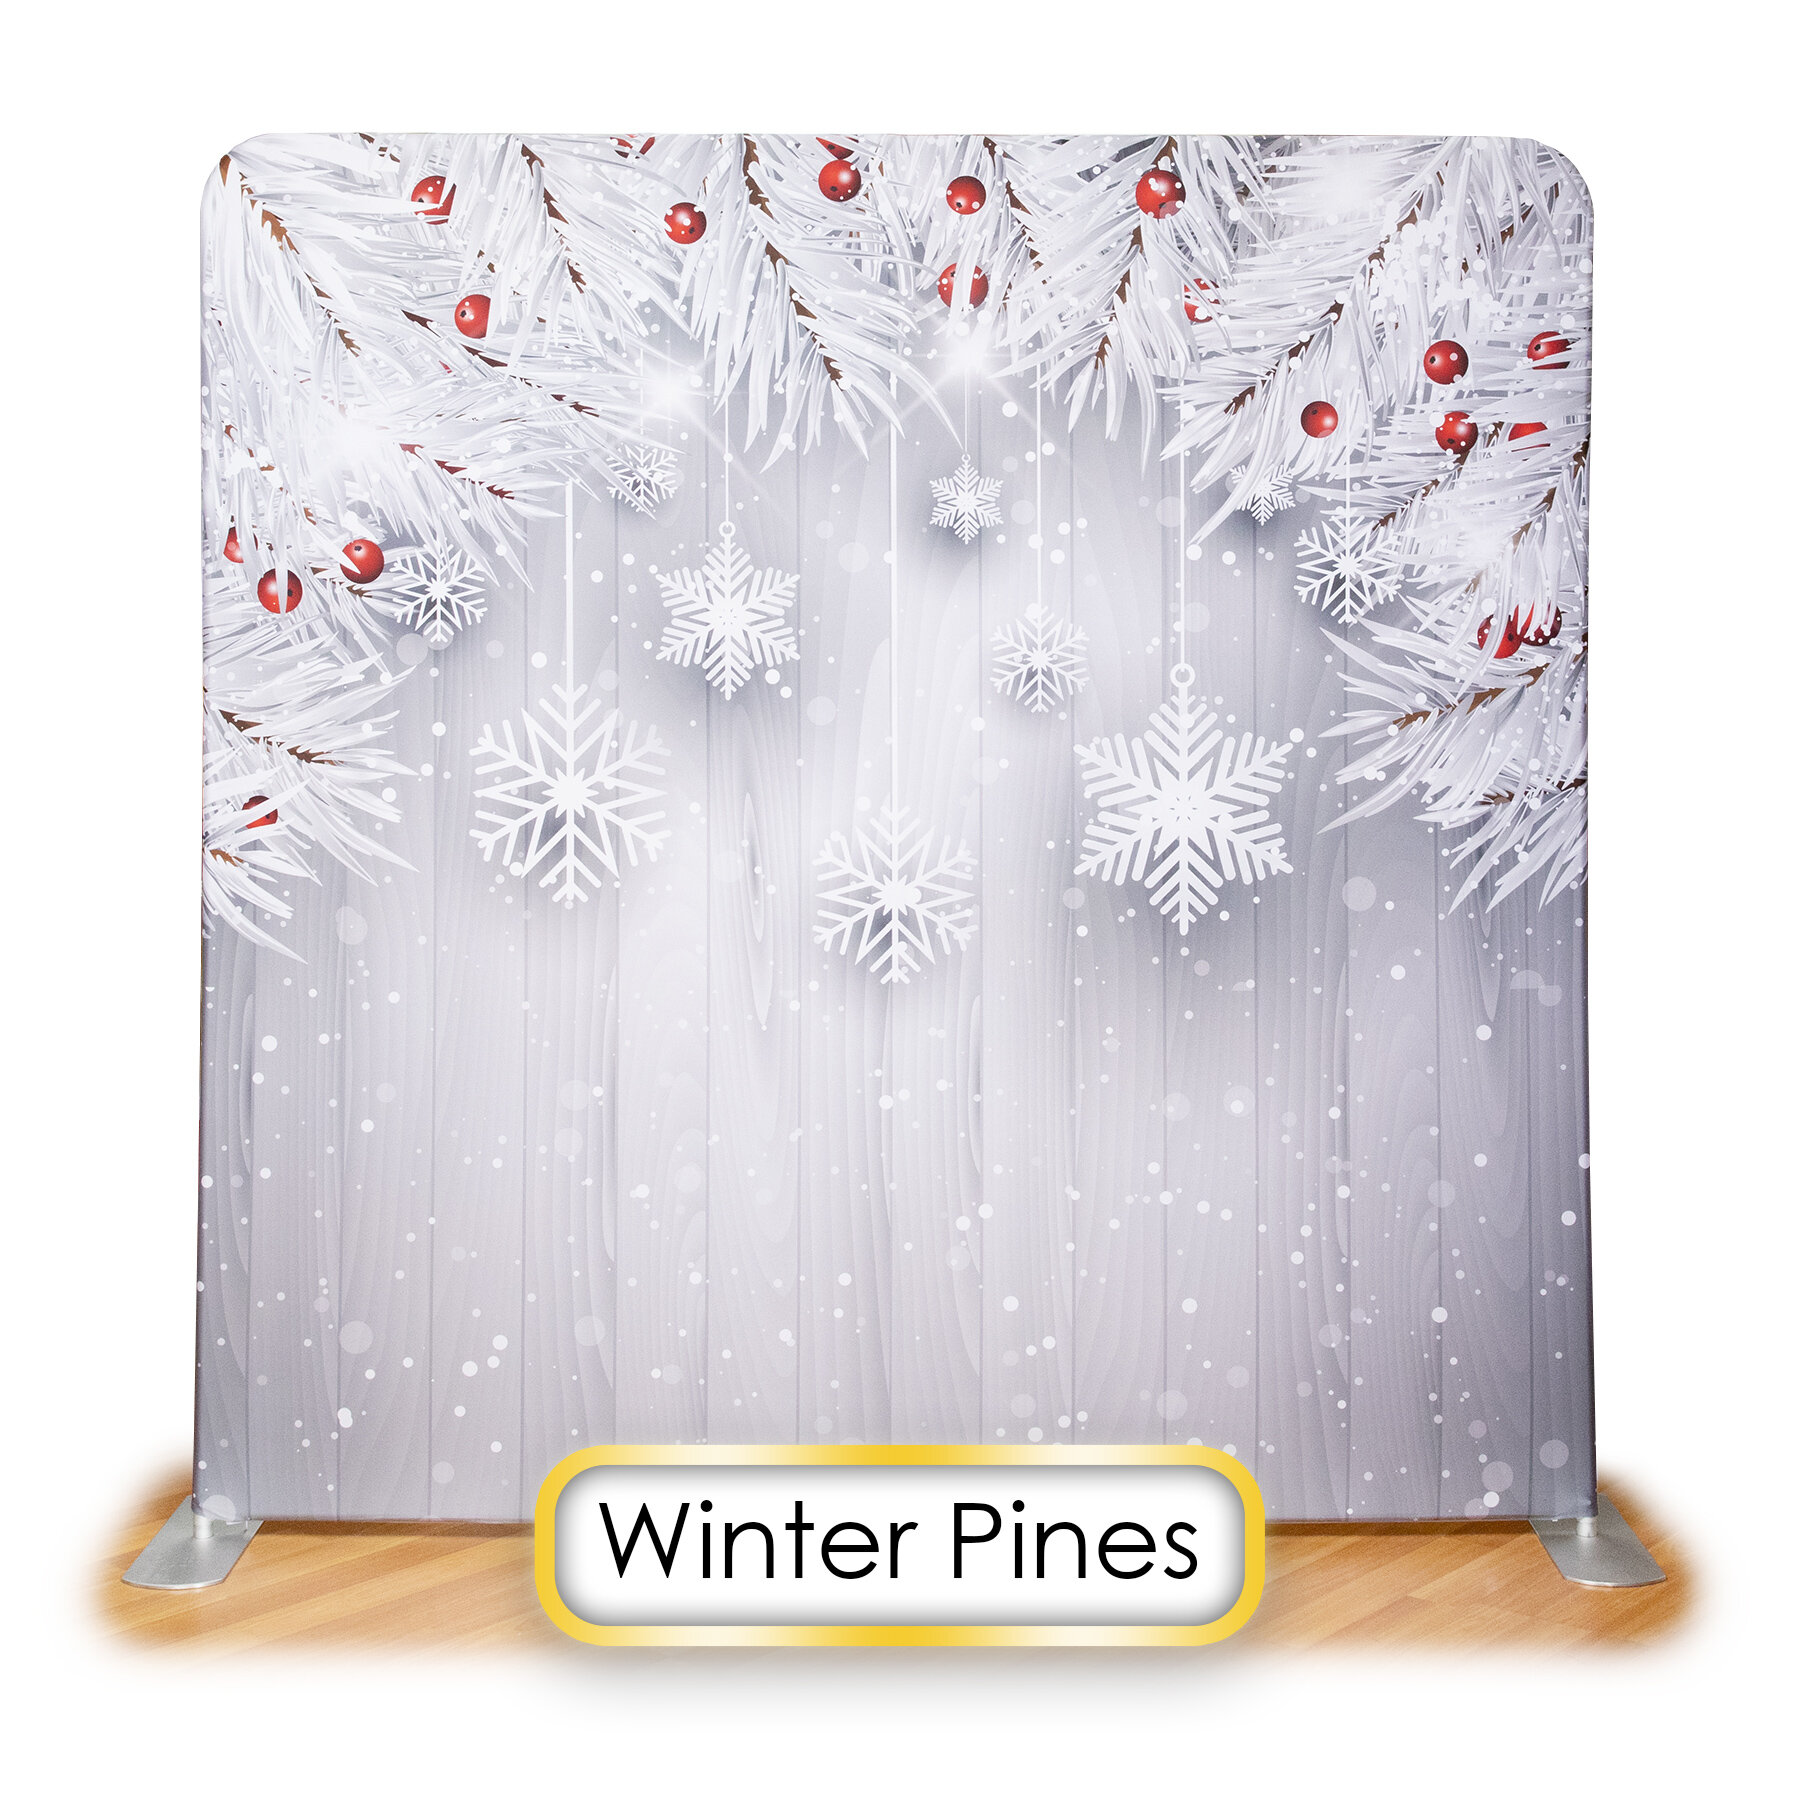 Winter Pines.jpg